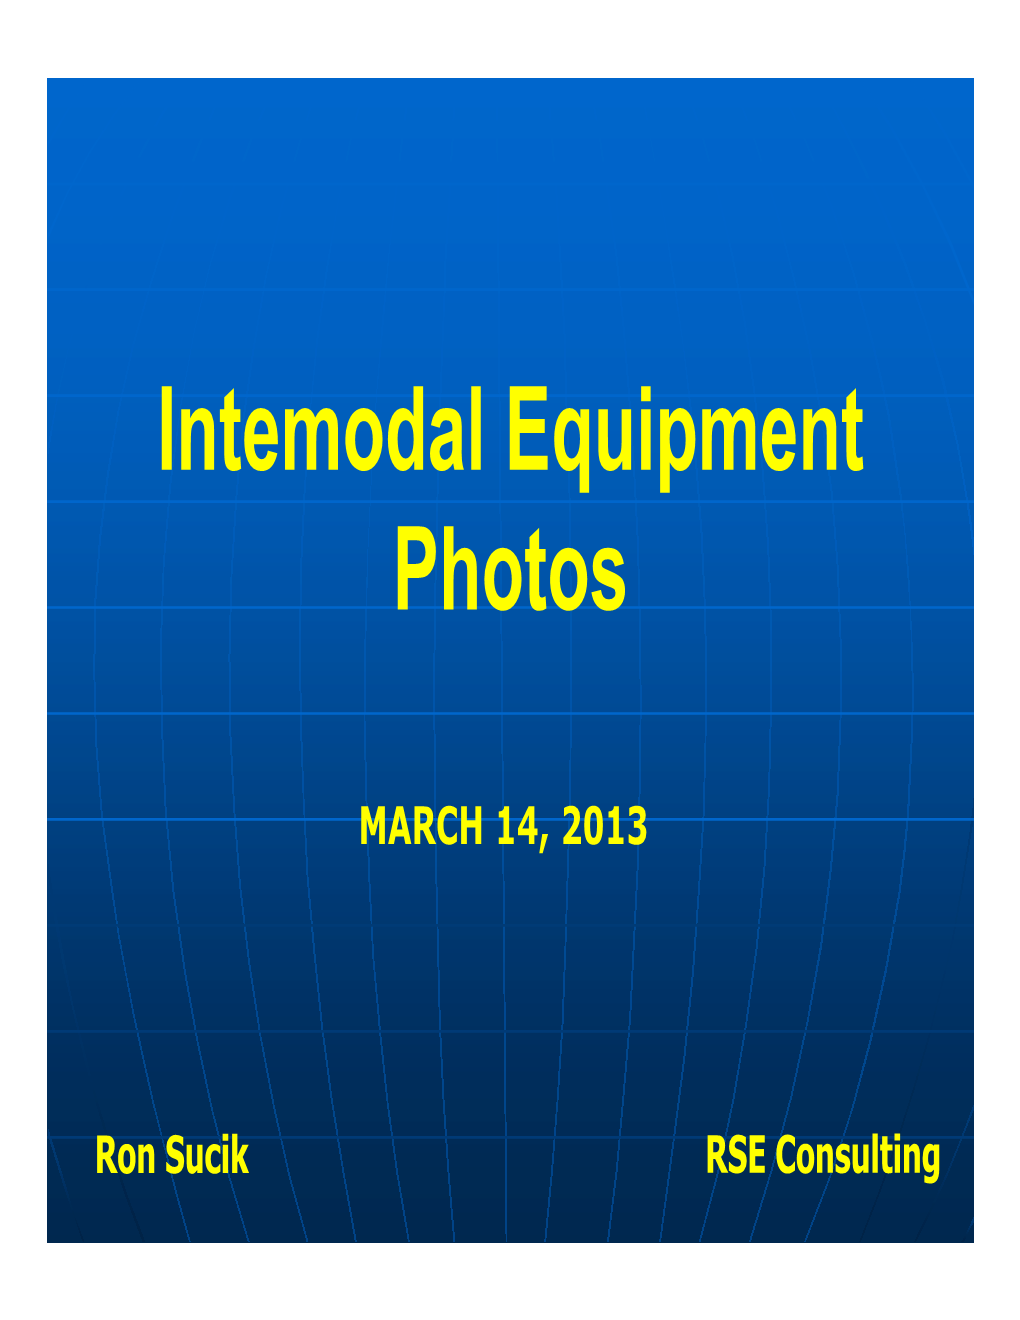 Intermodal Equipment Photos